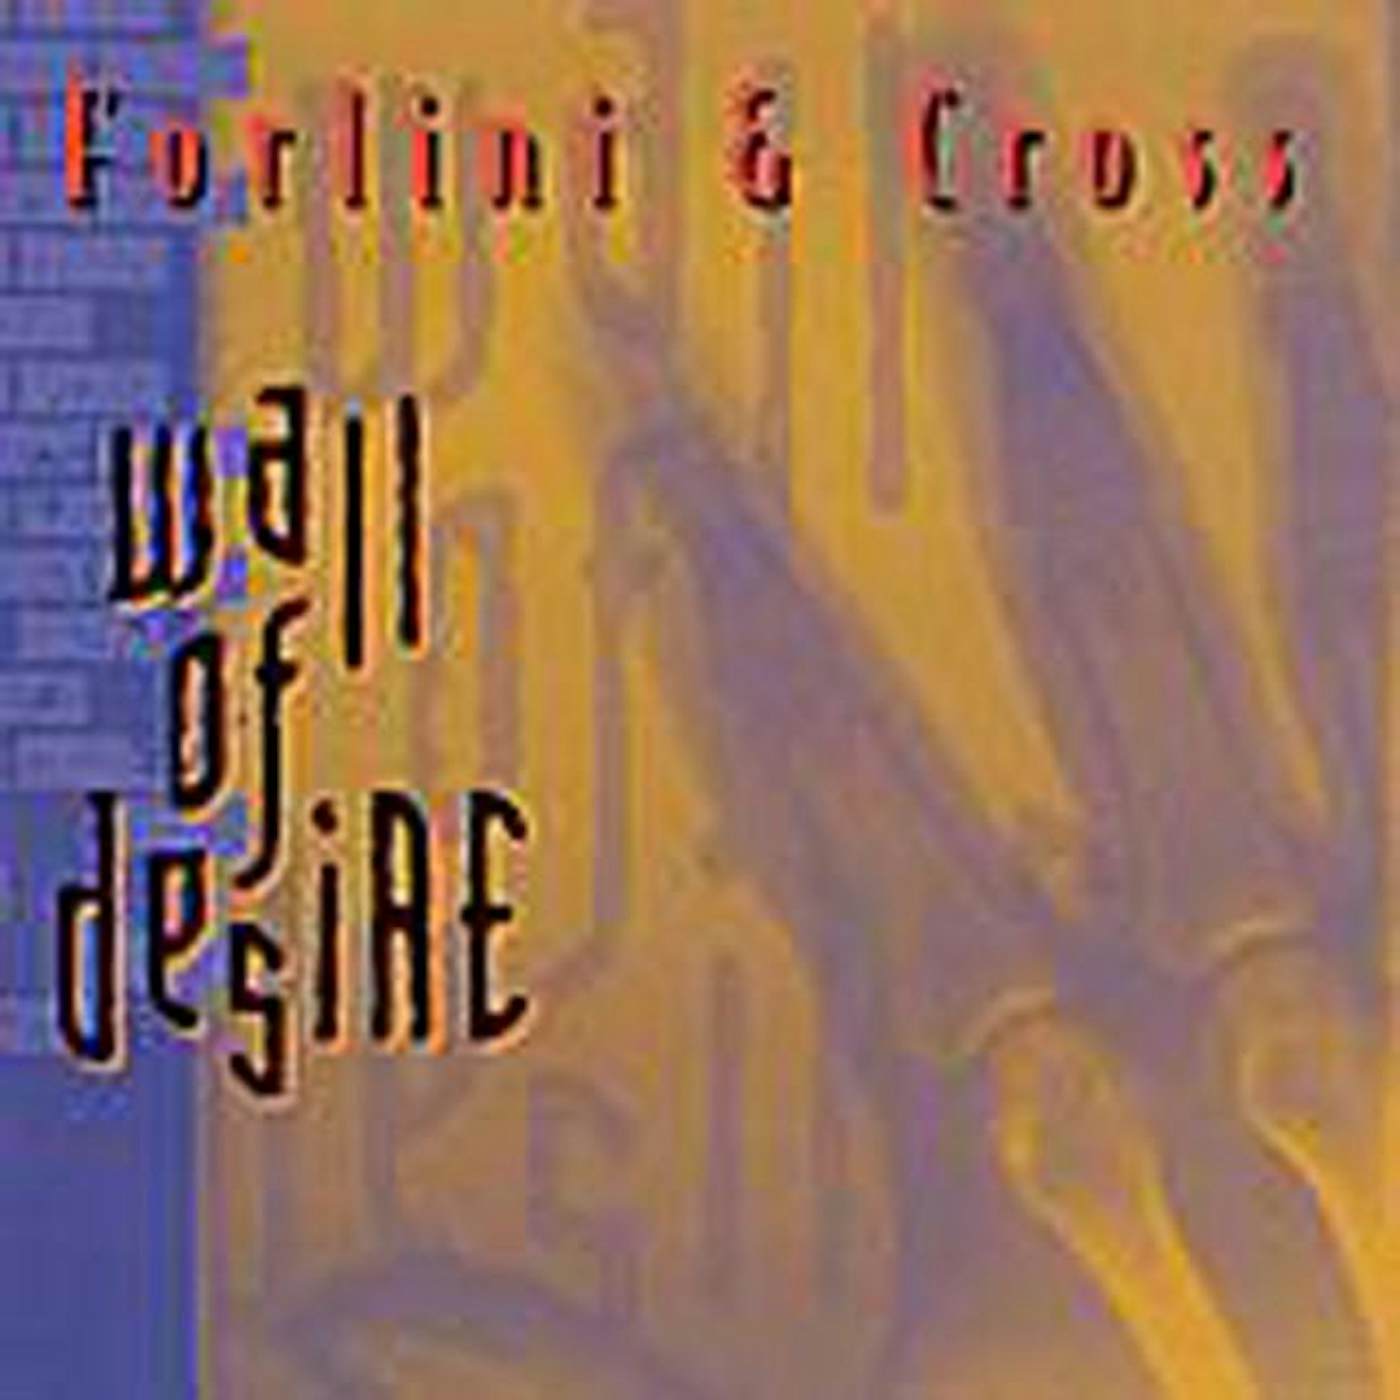 Forlini & Cross